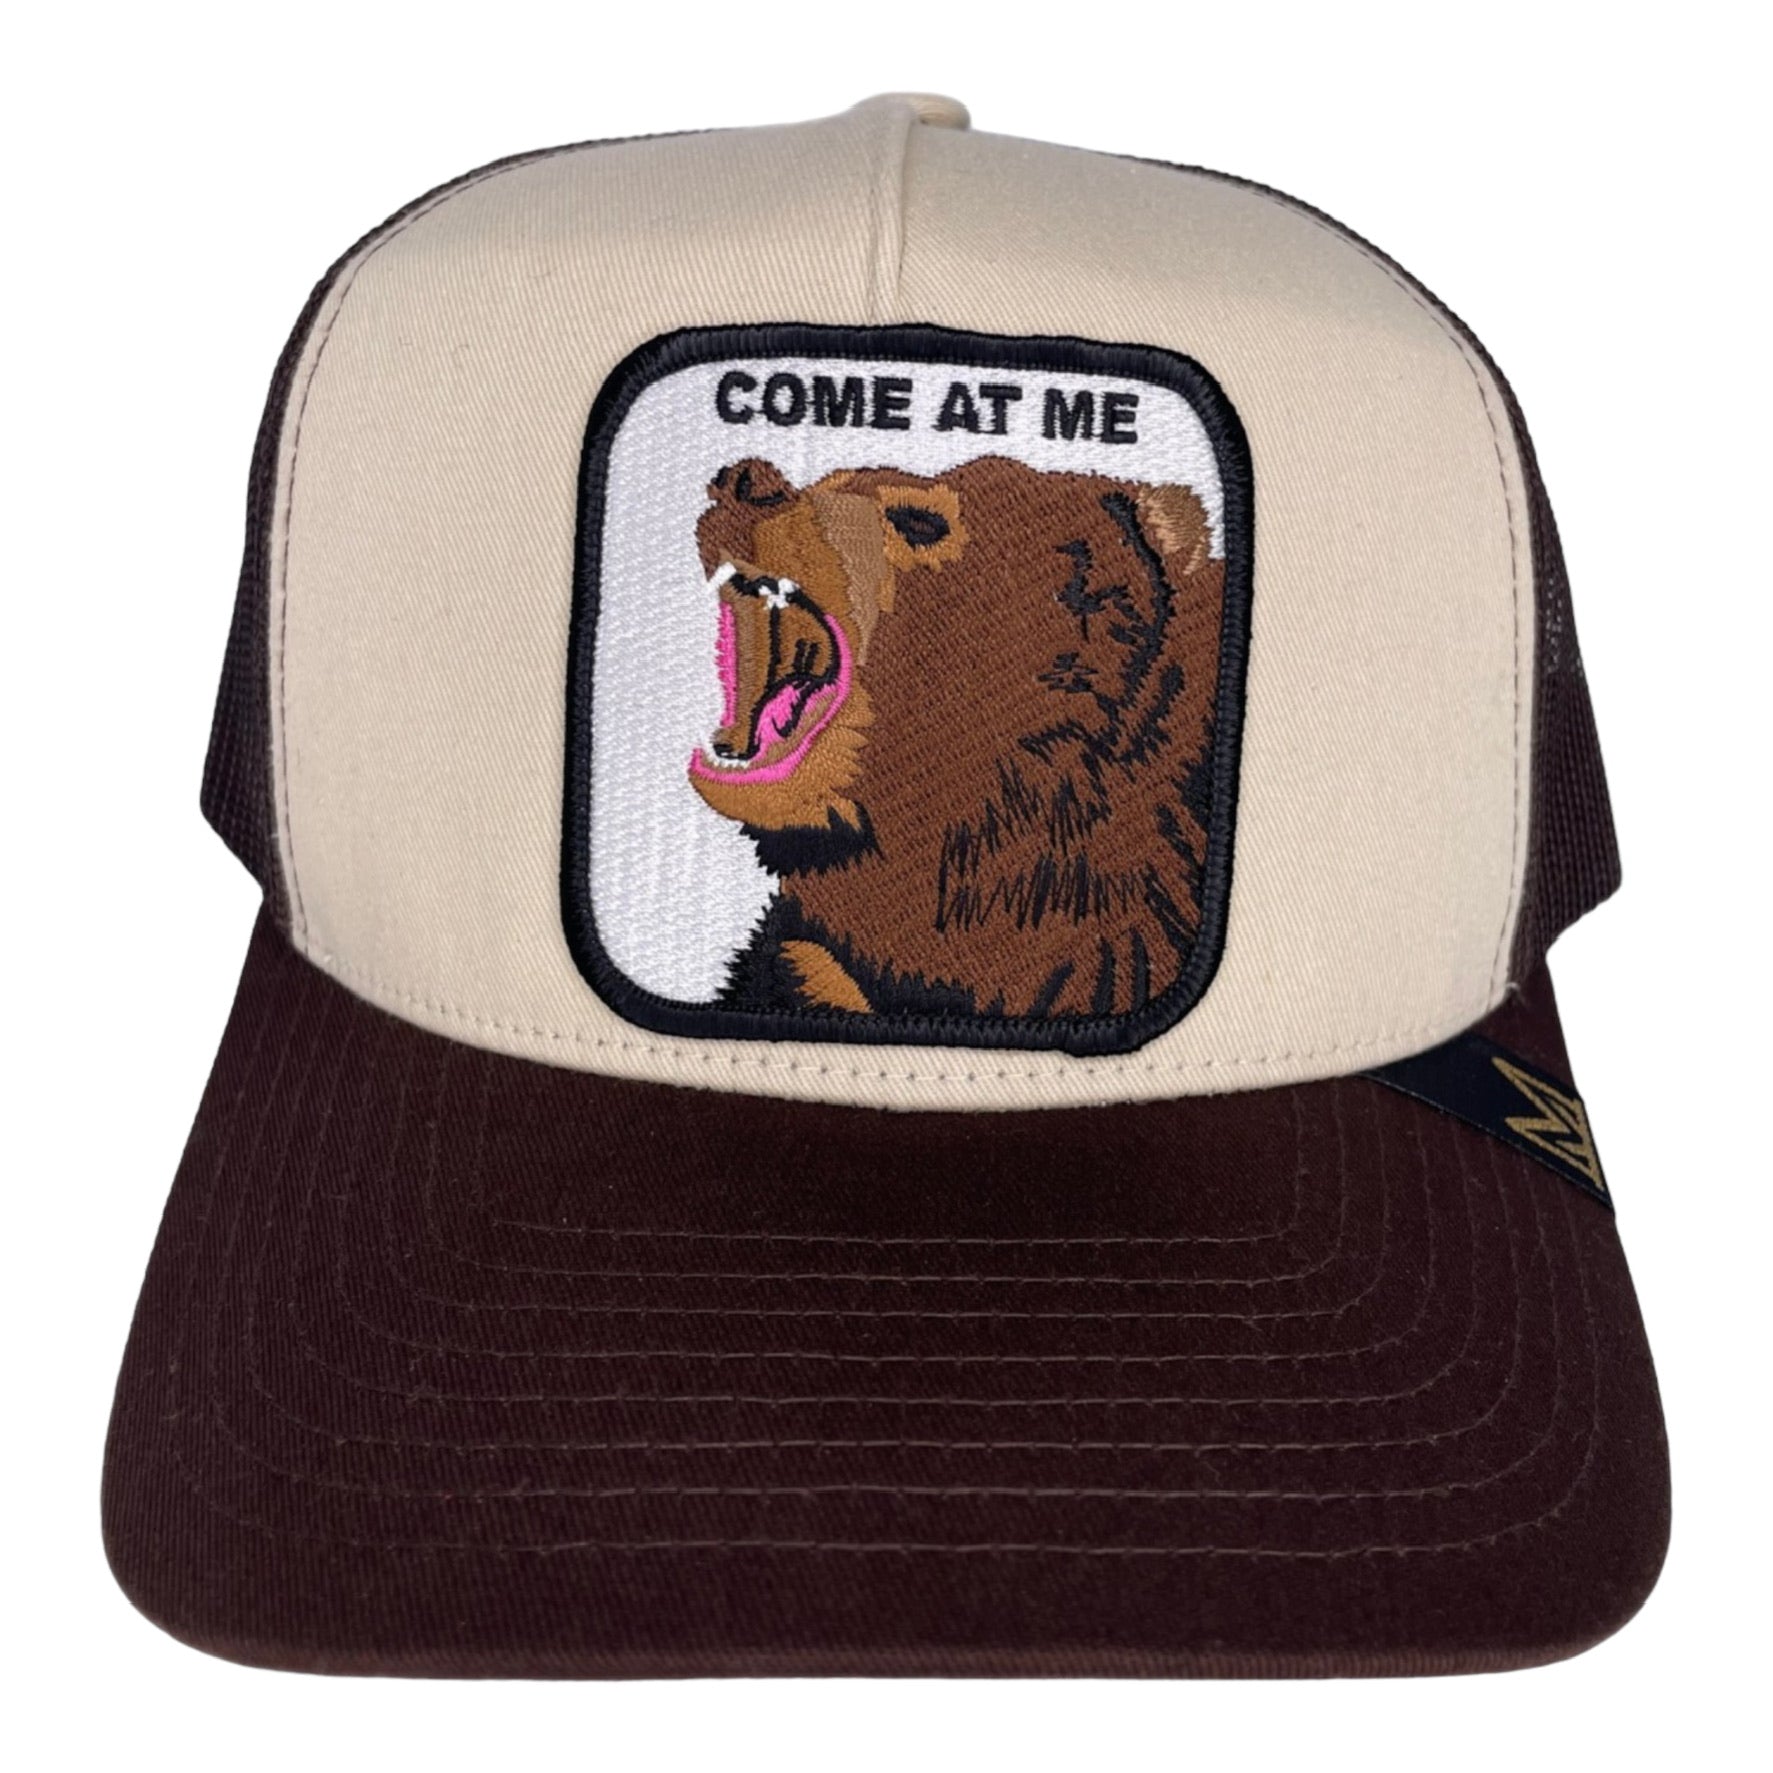 MV HATS: Come At Me Trucker AM685